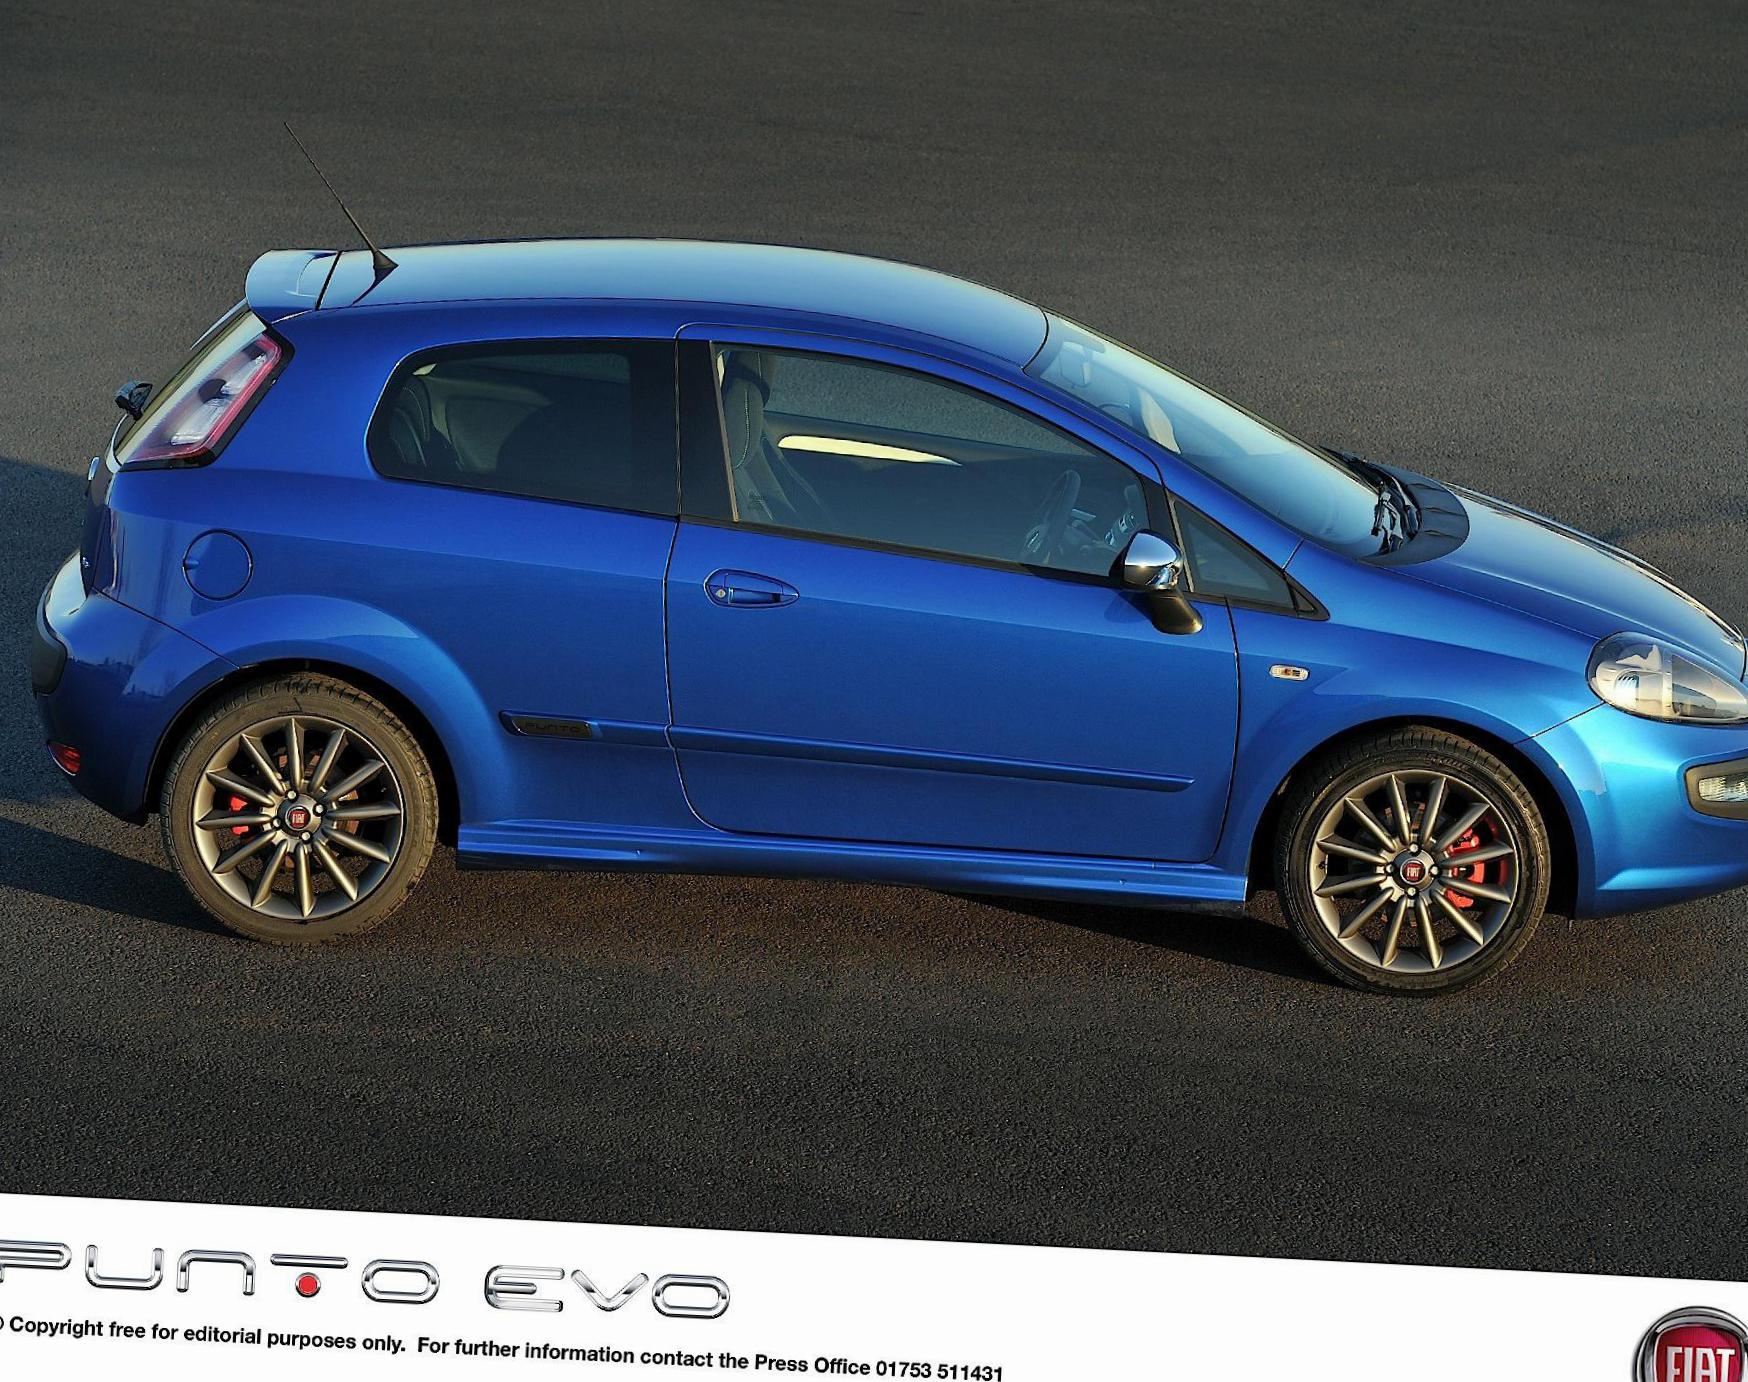 Fiat Punto Evo 3 doors model 2010